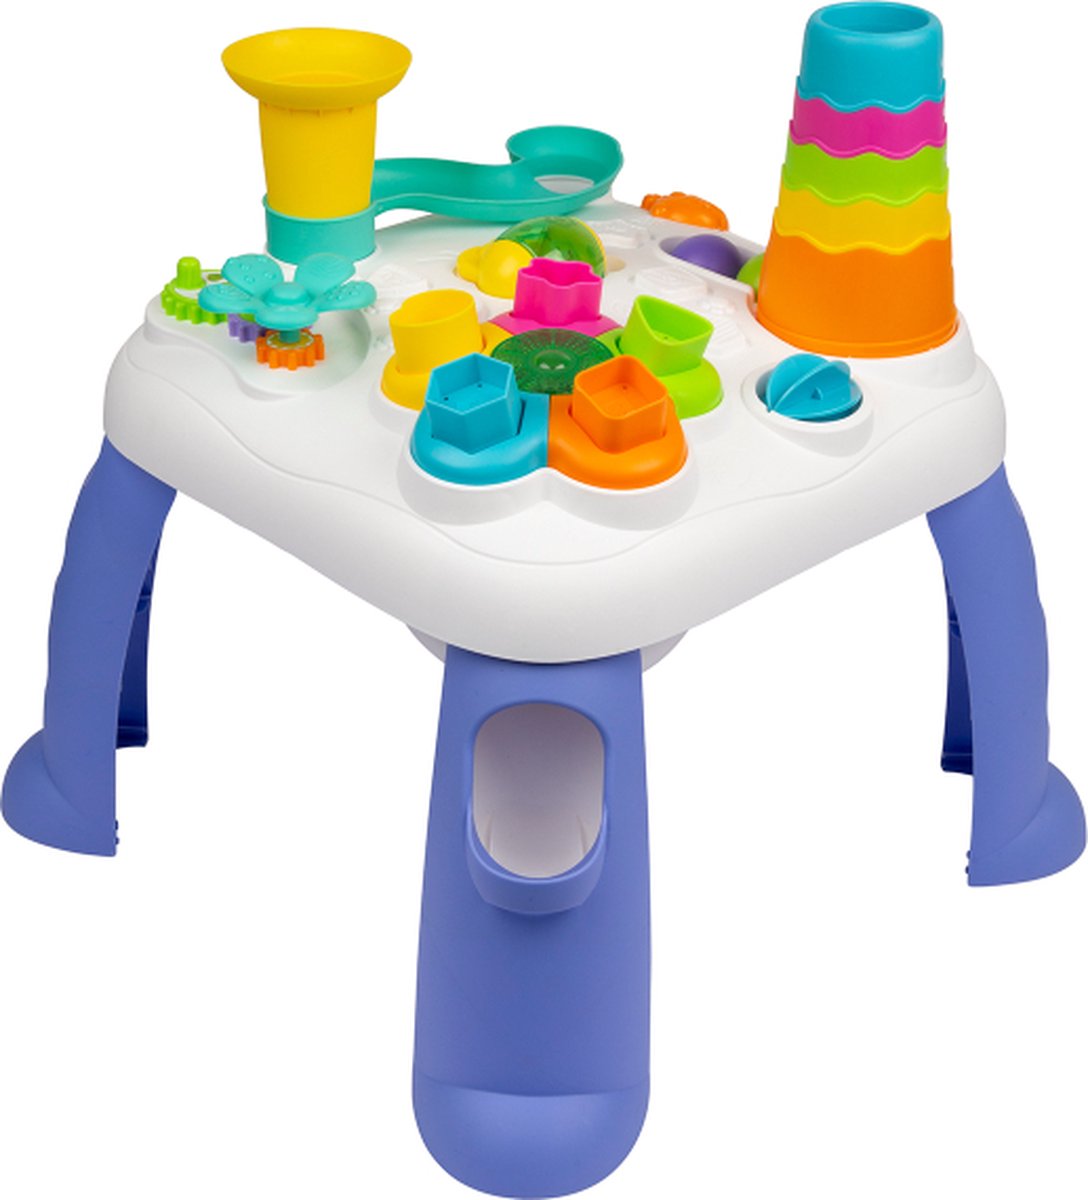 Playgro Sensory Explorer Music & Lights Activity Table Baby Activity Toys